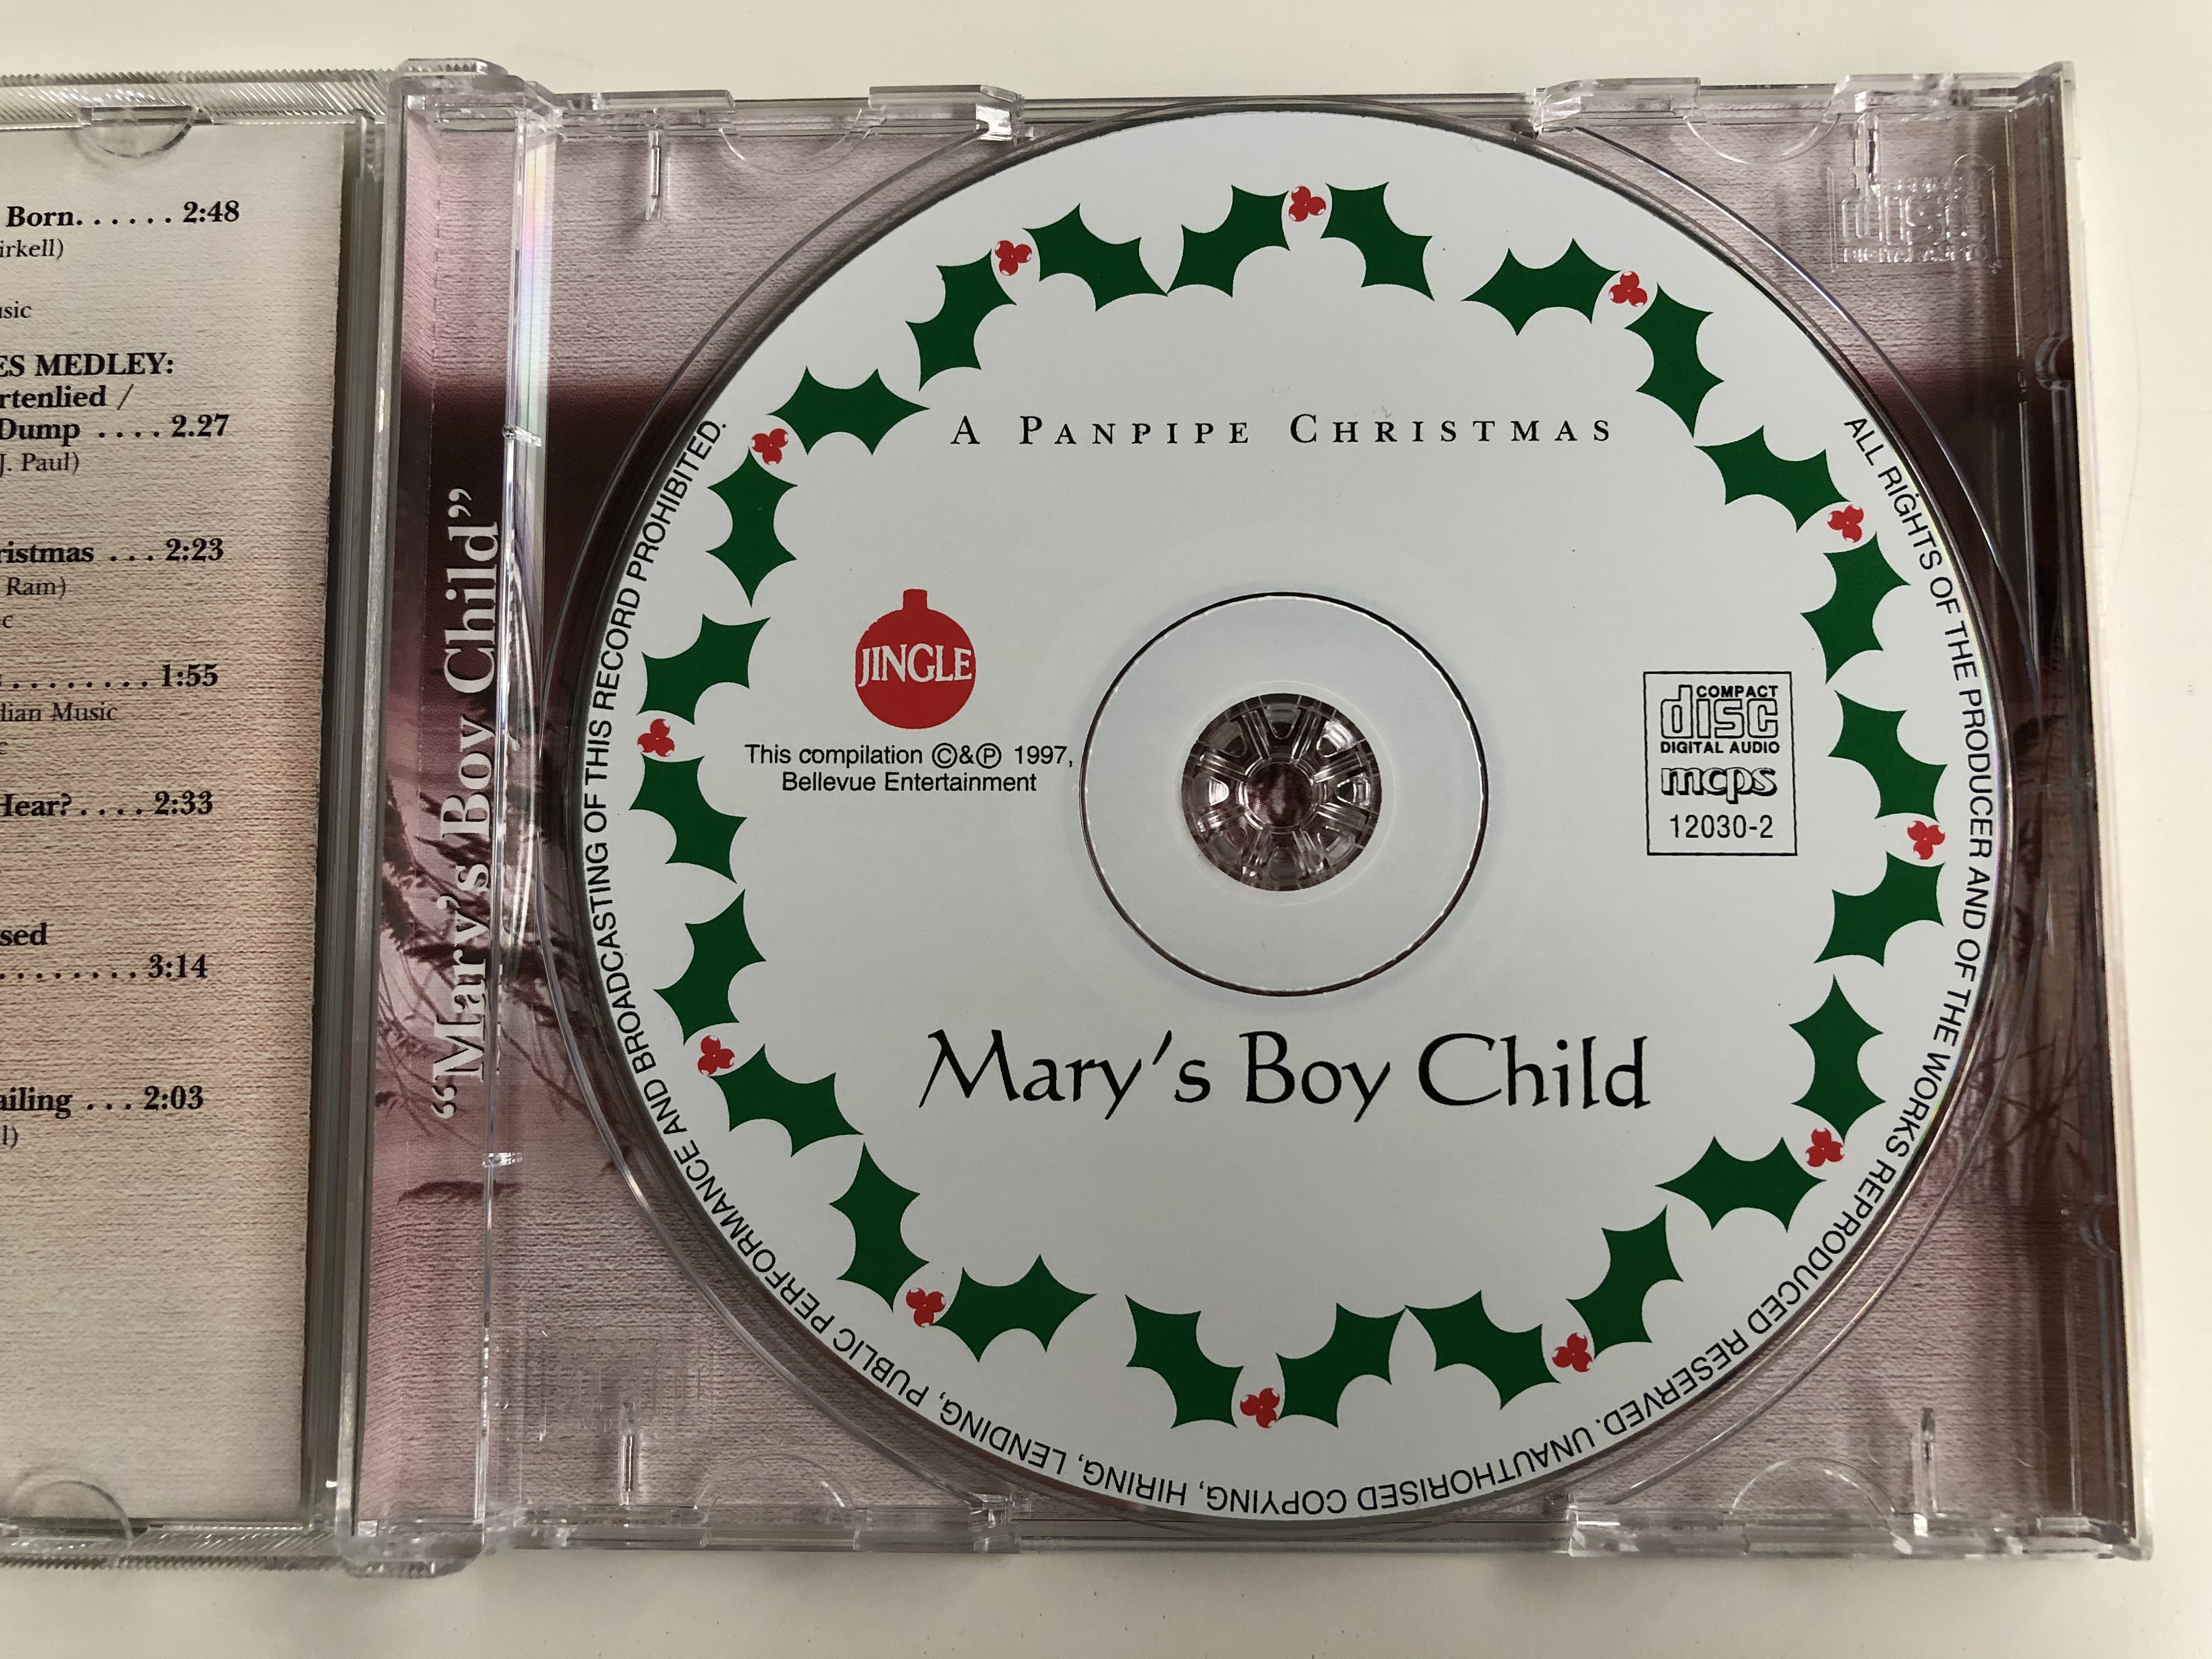 a-panpipe-christmas-mary-s-boy-child-the-beautiful-sound-of-the-panpipes-silent-night-mary-s-boy-child-mistletoe-wine-sleigh-ride-jingle-audio-cd-1997-12030-2-3-.jpg